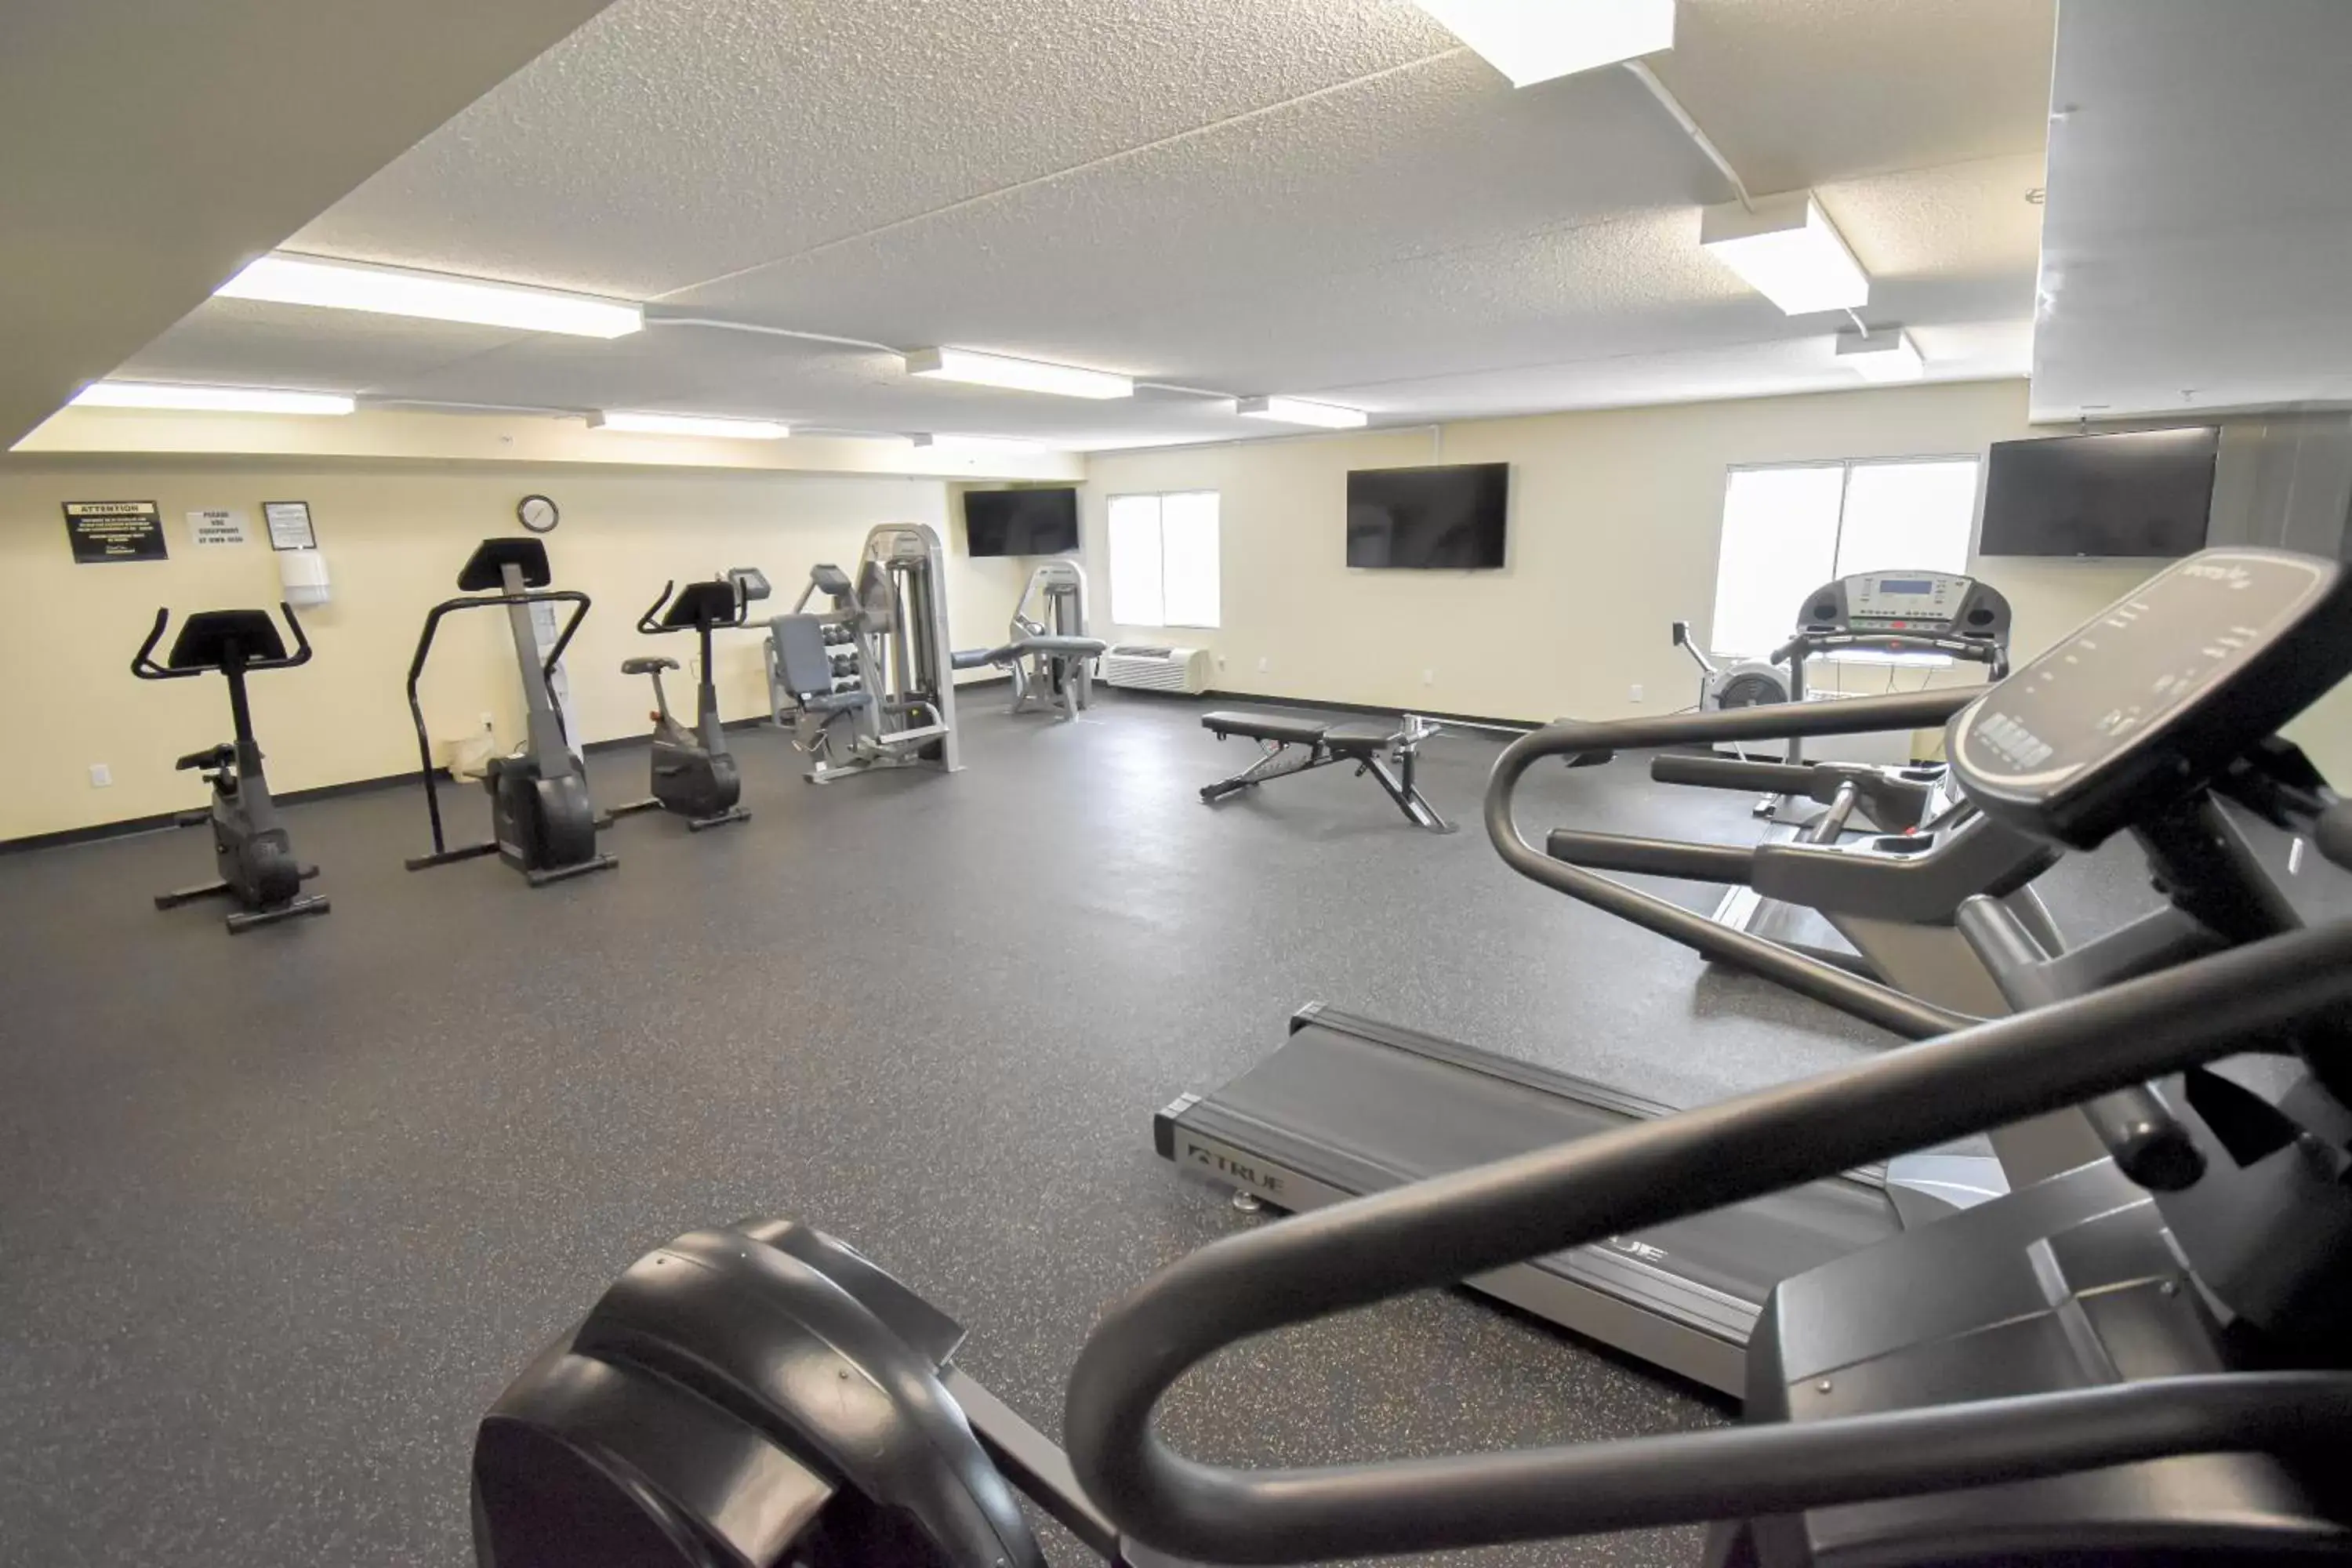 Fitness centre/facilities, Fitness Center/Facilities in Canad Inns Destination Centre Club Regent Casino Hotel